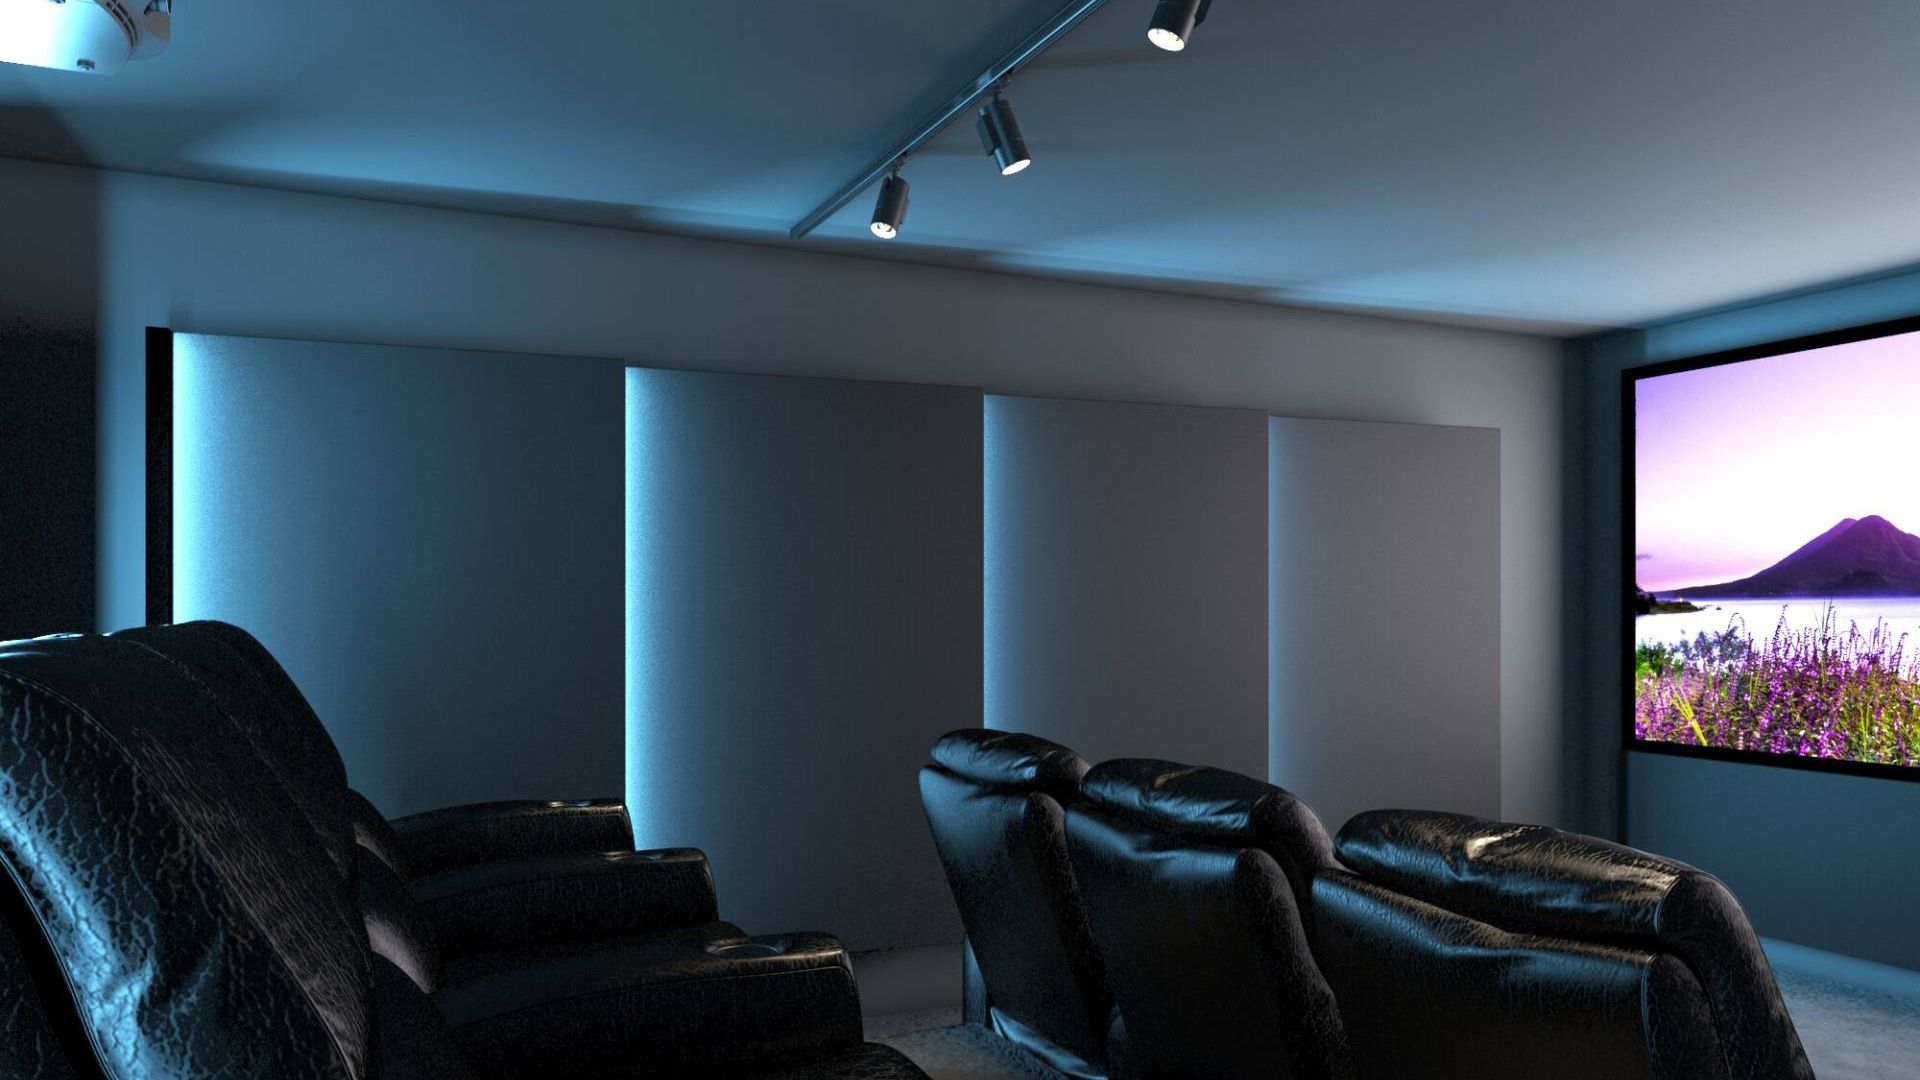 Home Cinema Acoustics Explained